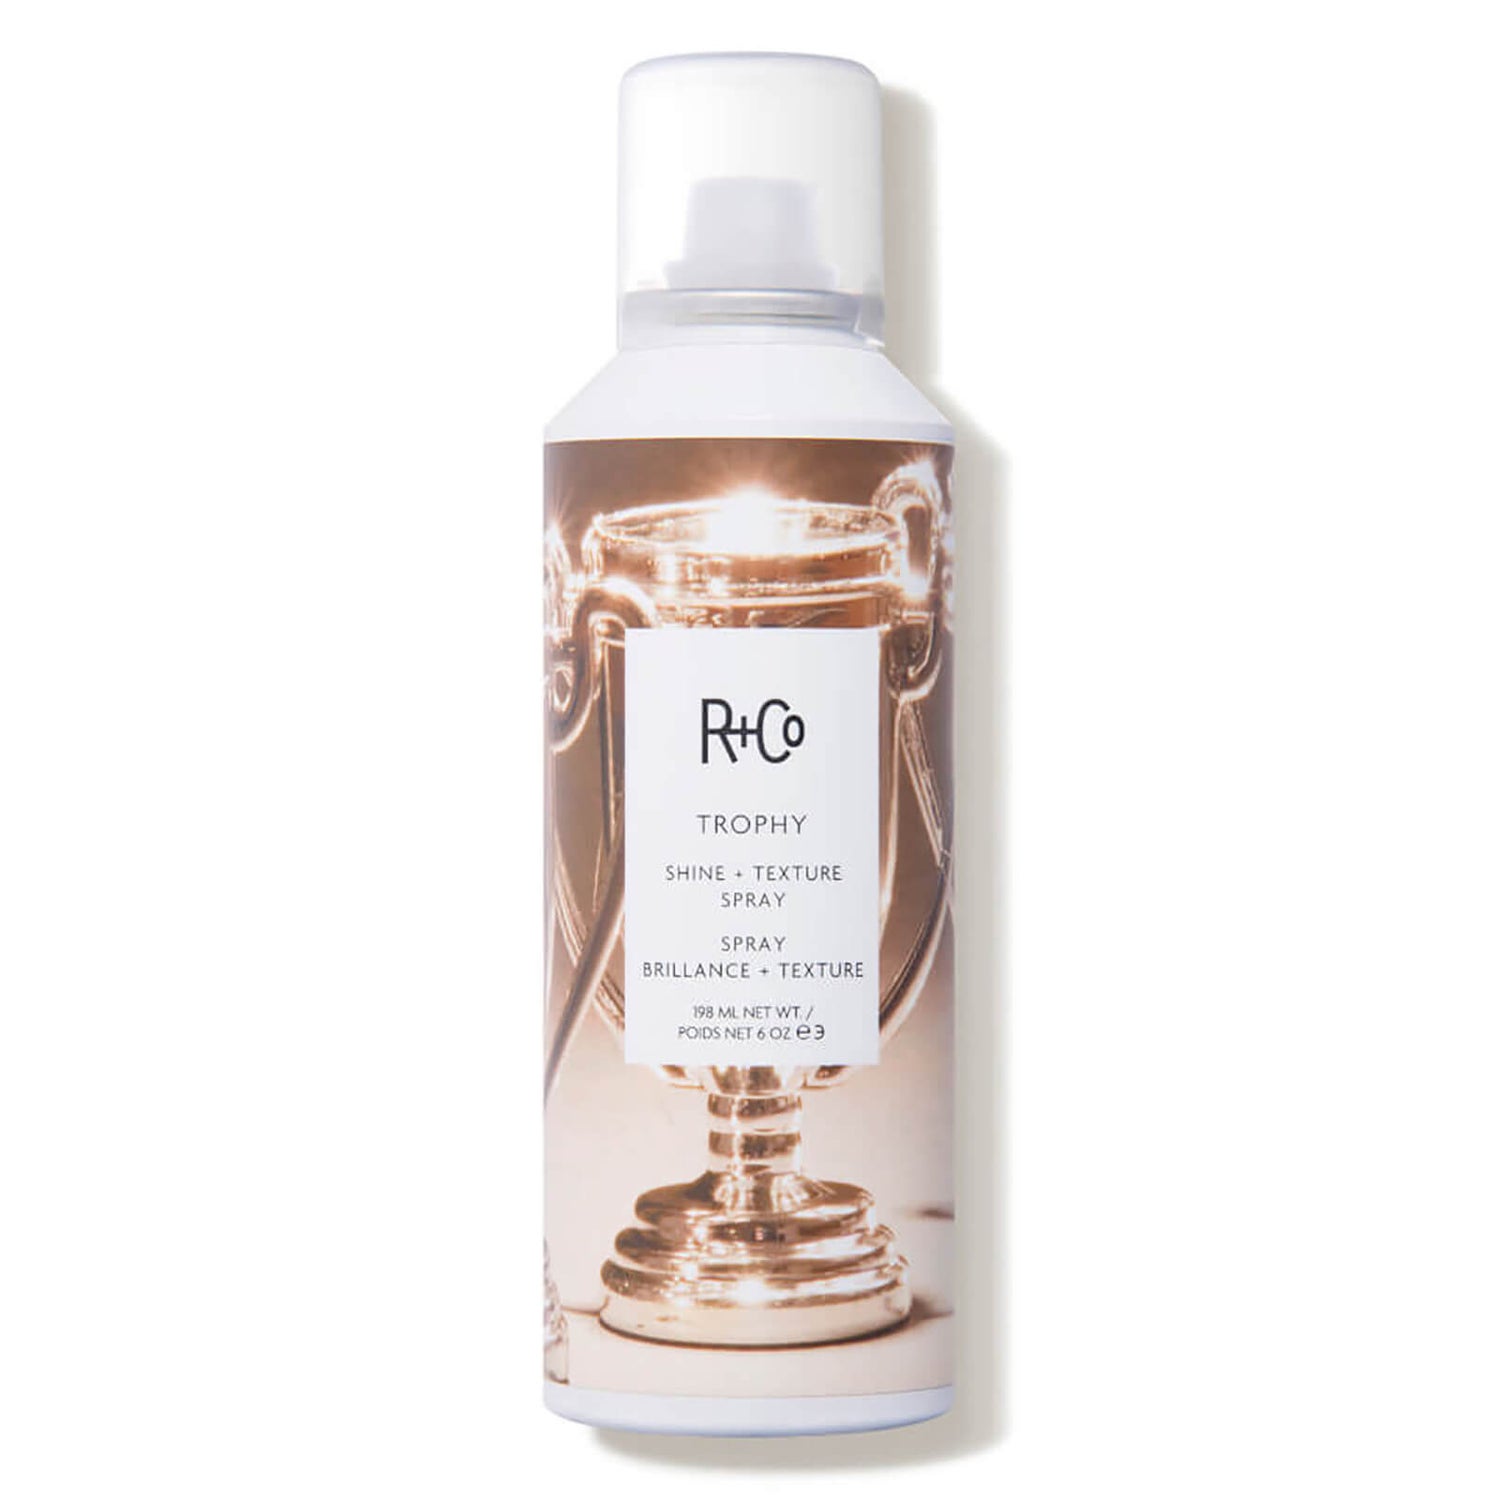 R+Co TROPHY Shine Texture Spray (6 oz.)